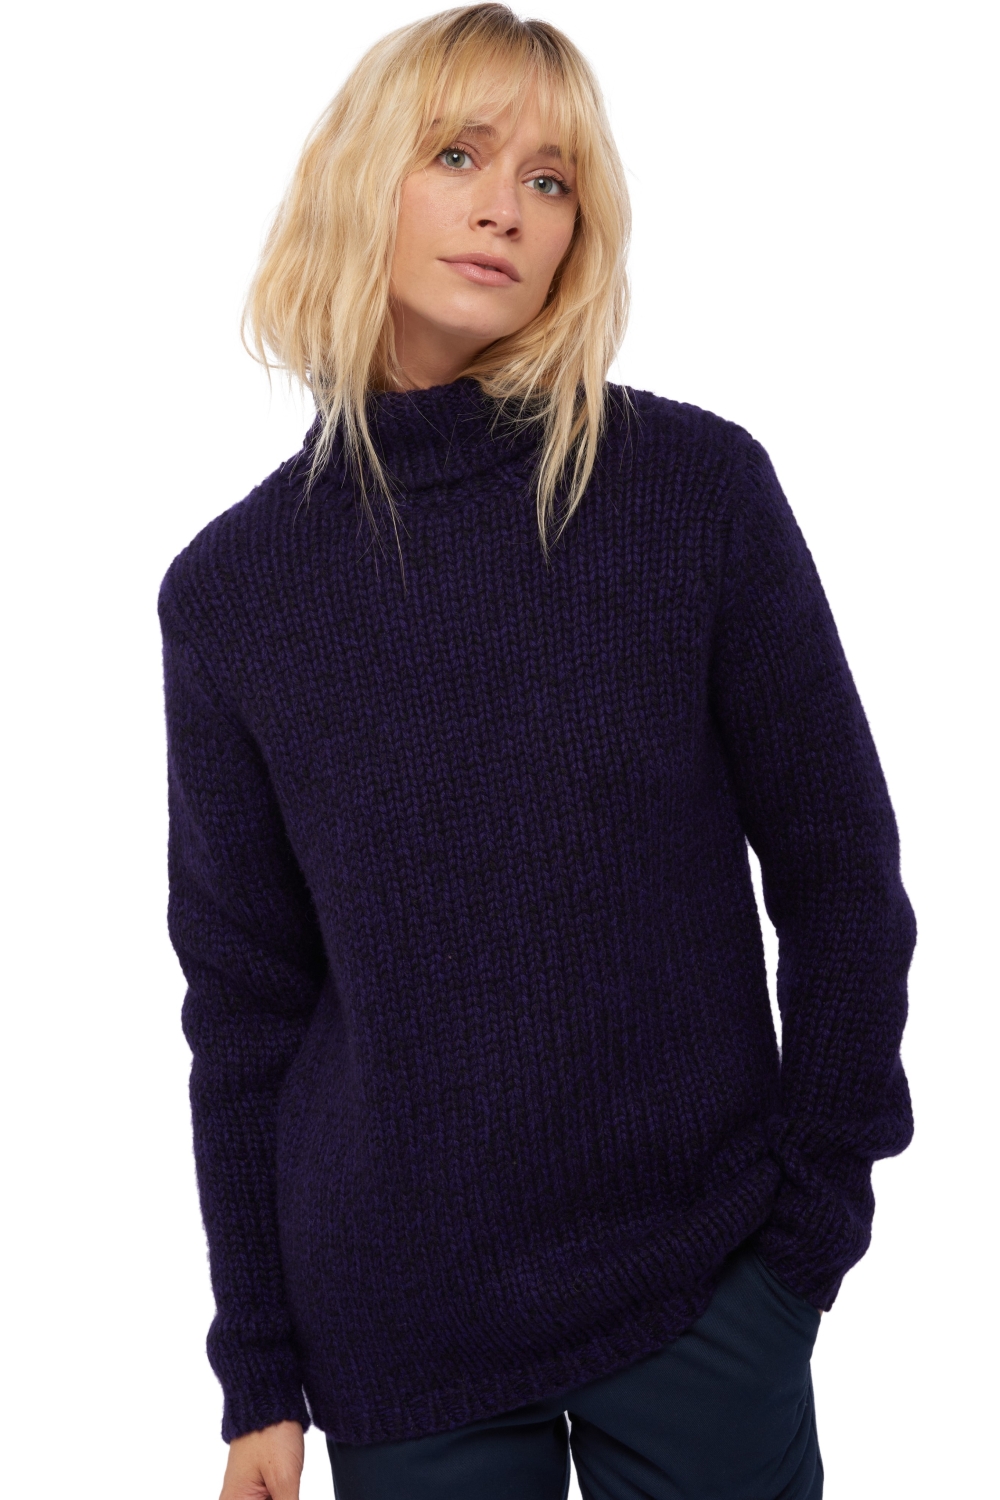 Cashmere ladies chunky sweater vicenza black deep purple s